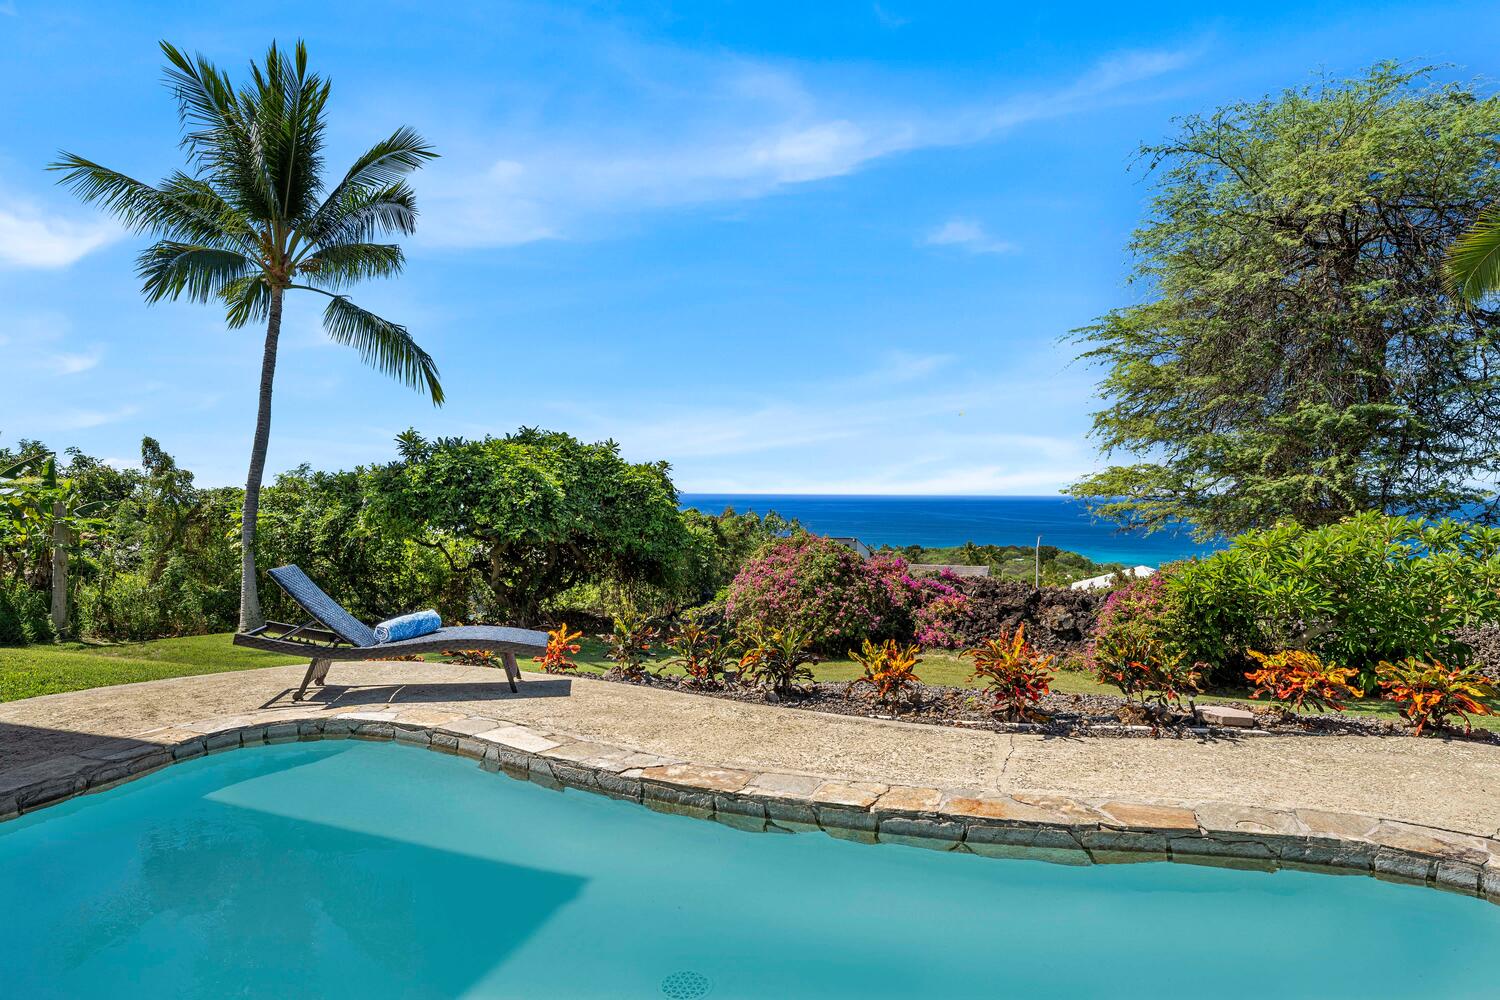 Kailua Kona Vacation Rentals, Ho'okipa Hale - Sunbathe under the Hawaiian sun